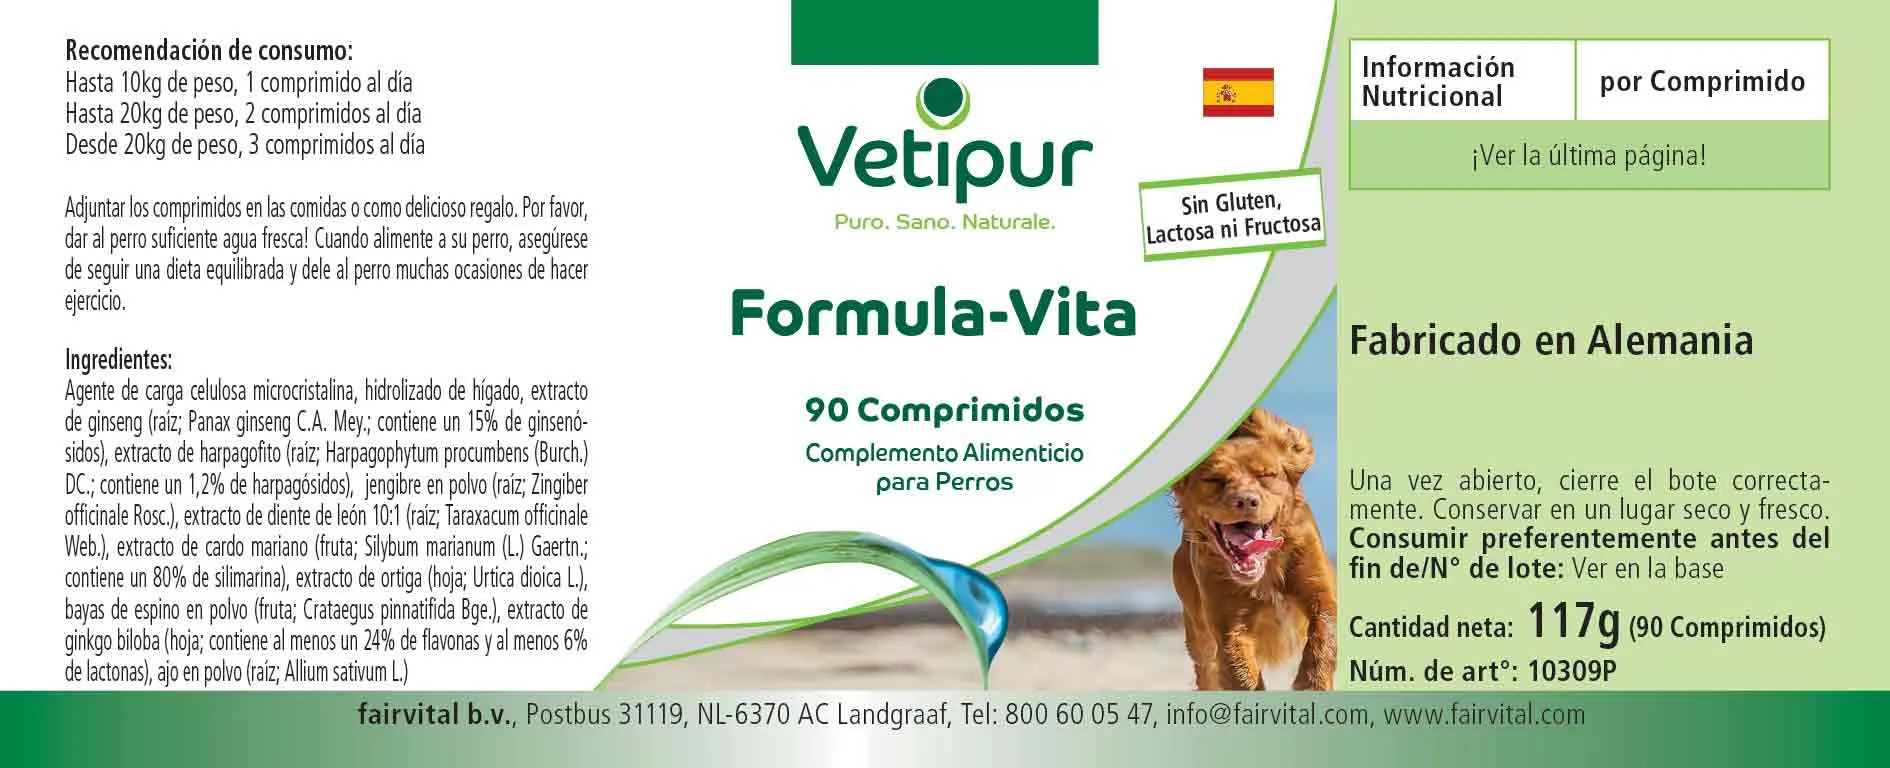 Vita-Formel  - 90 comprimidos para perros | Vetipur